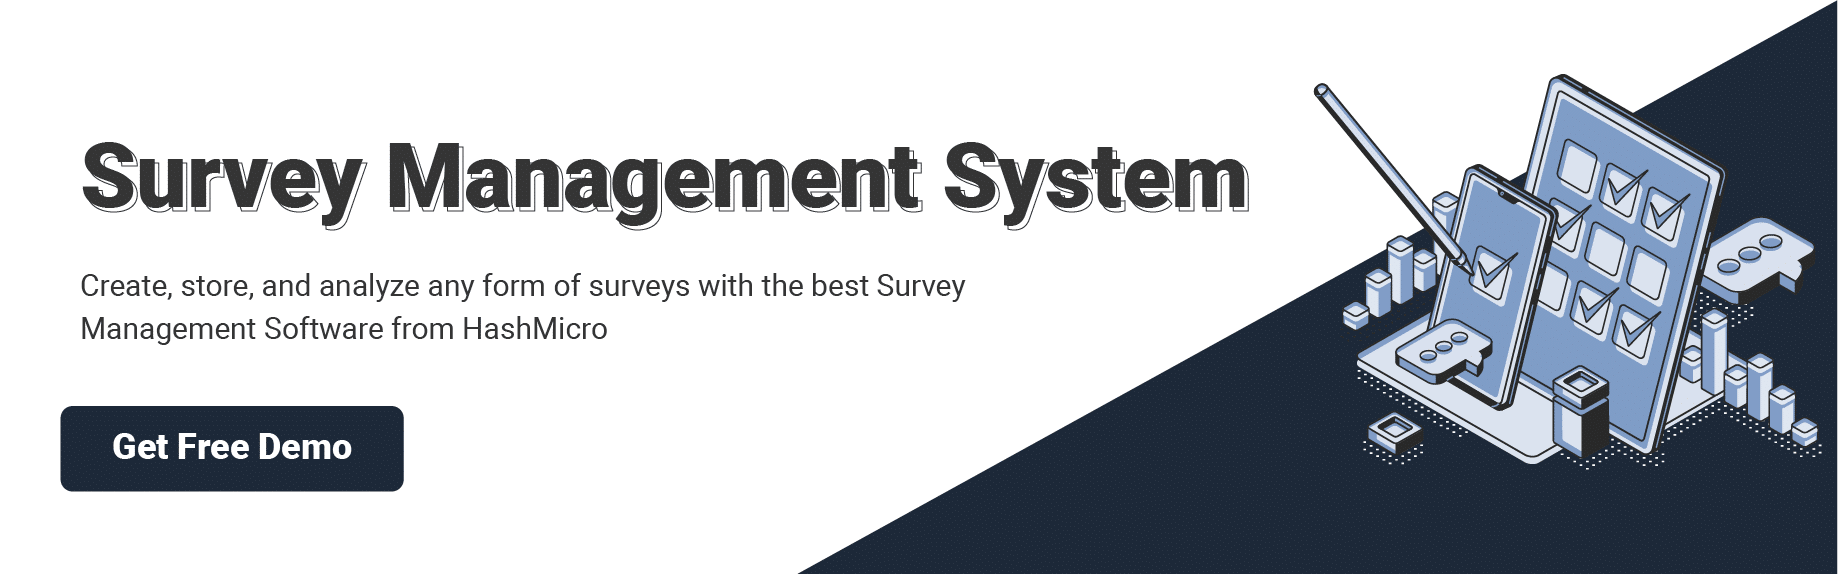 SurveyManagement